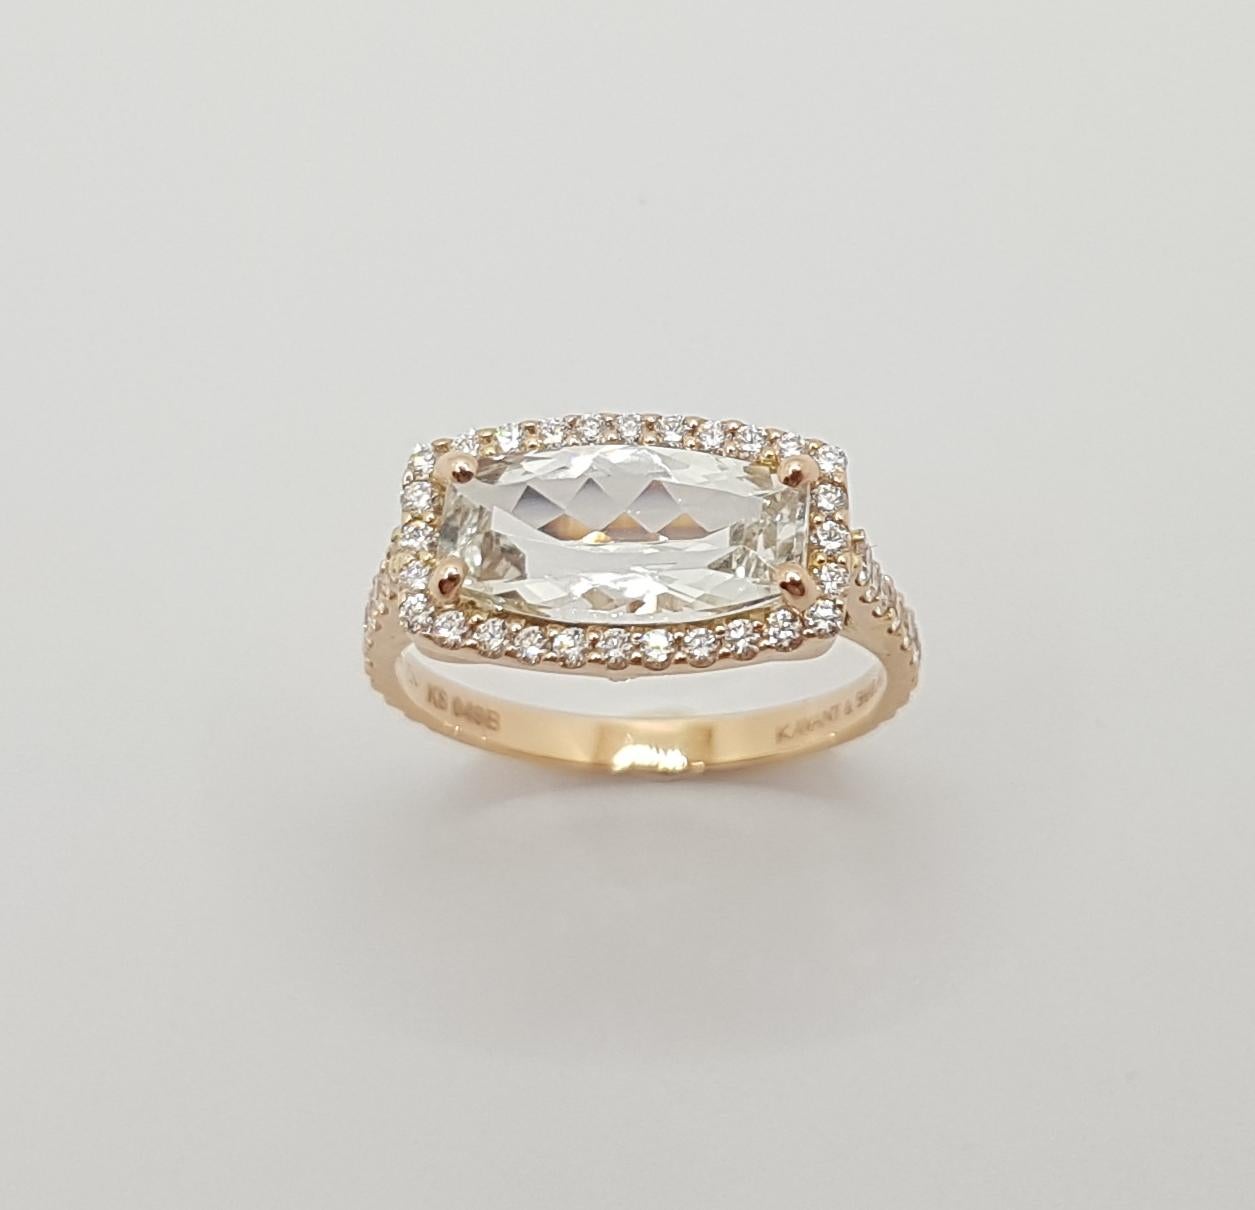 White Topaz with Diamond Ring Set in 18 Karat Rose Gold Settings For Sale 6